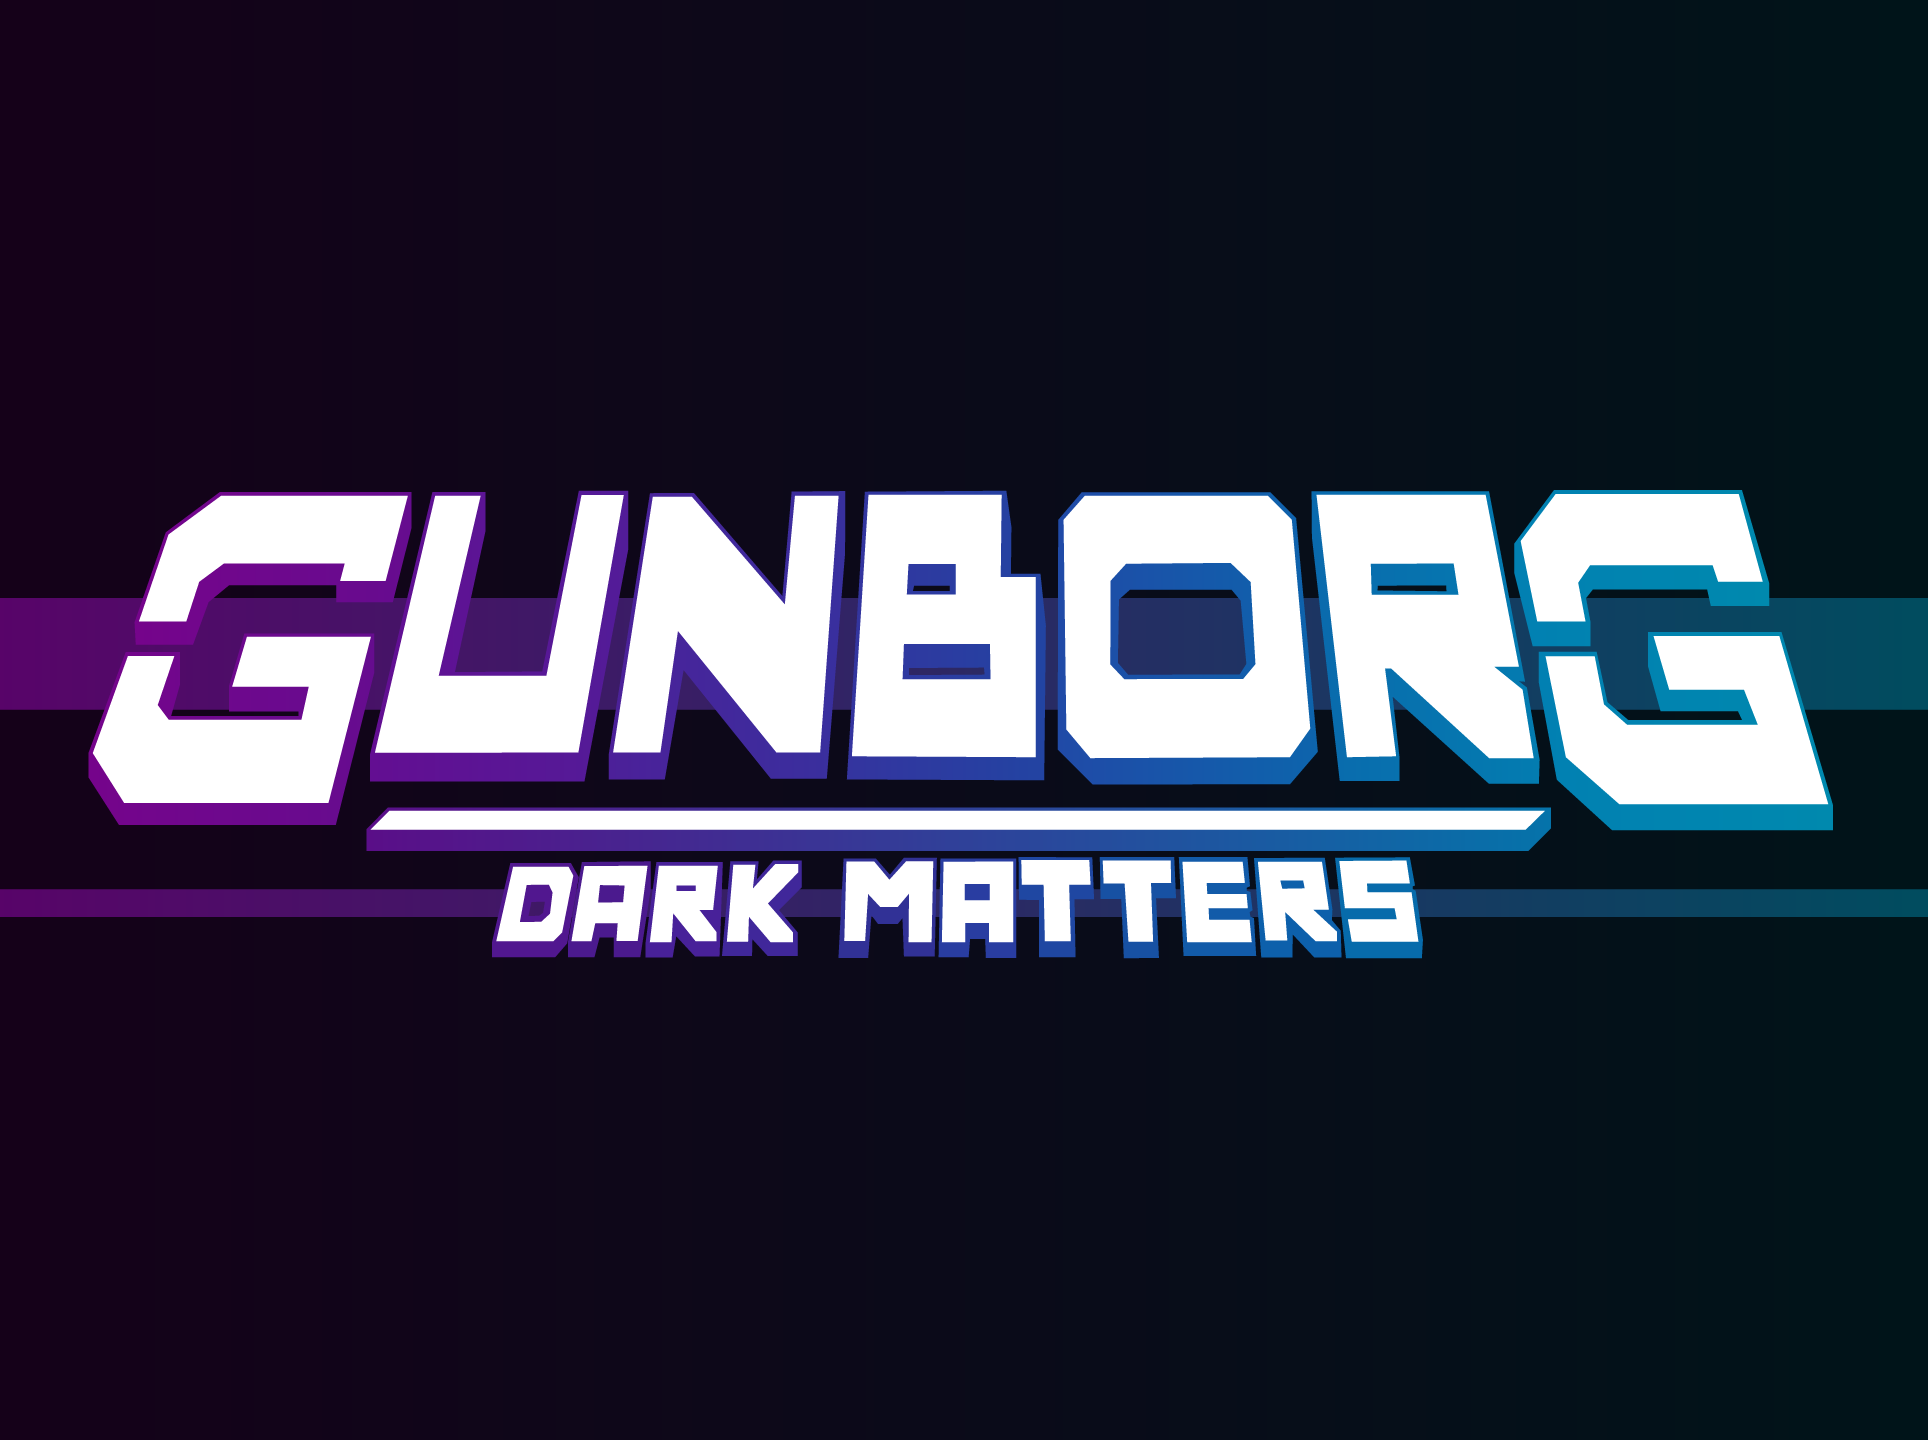 Video Games Game Logo Gunborg Tech Dark Fighting Fighting Games Cyberpunk Text White Text Black Back 1928x1440